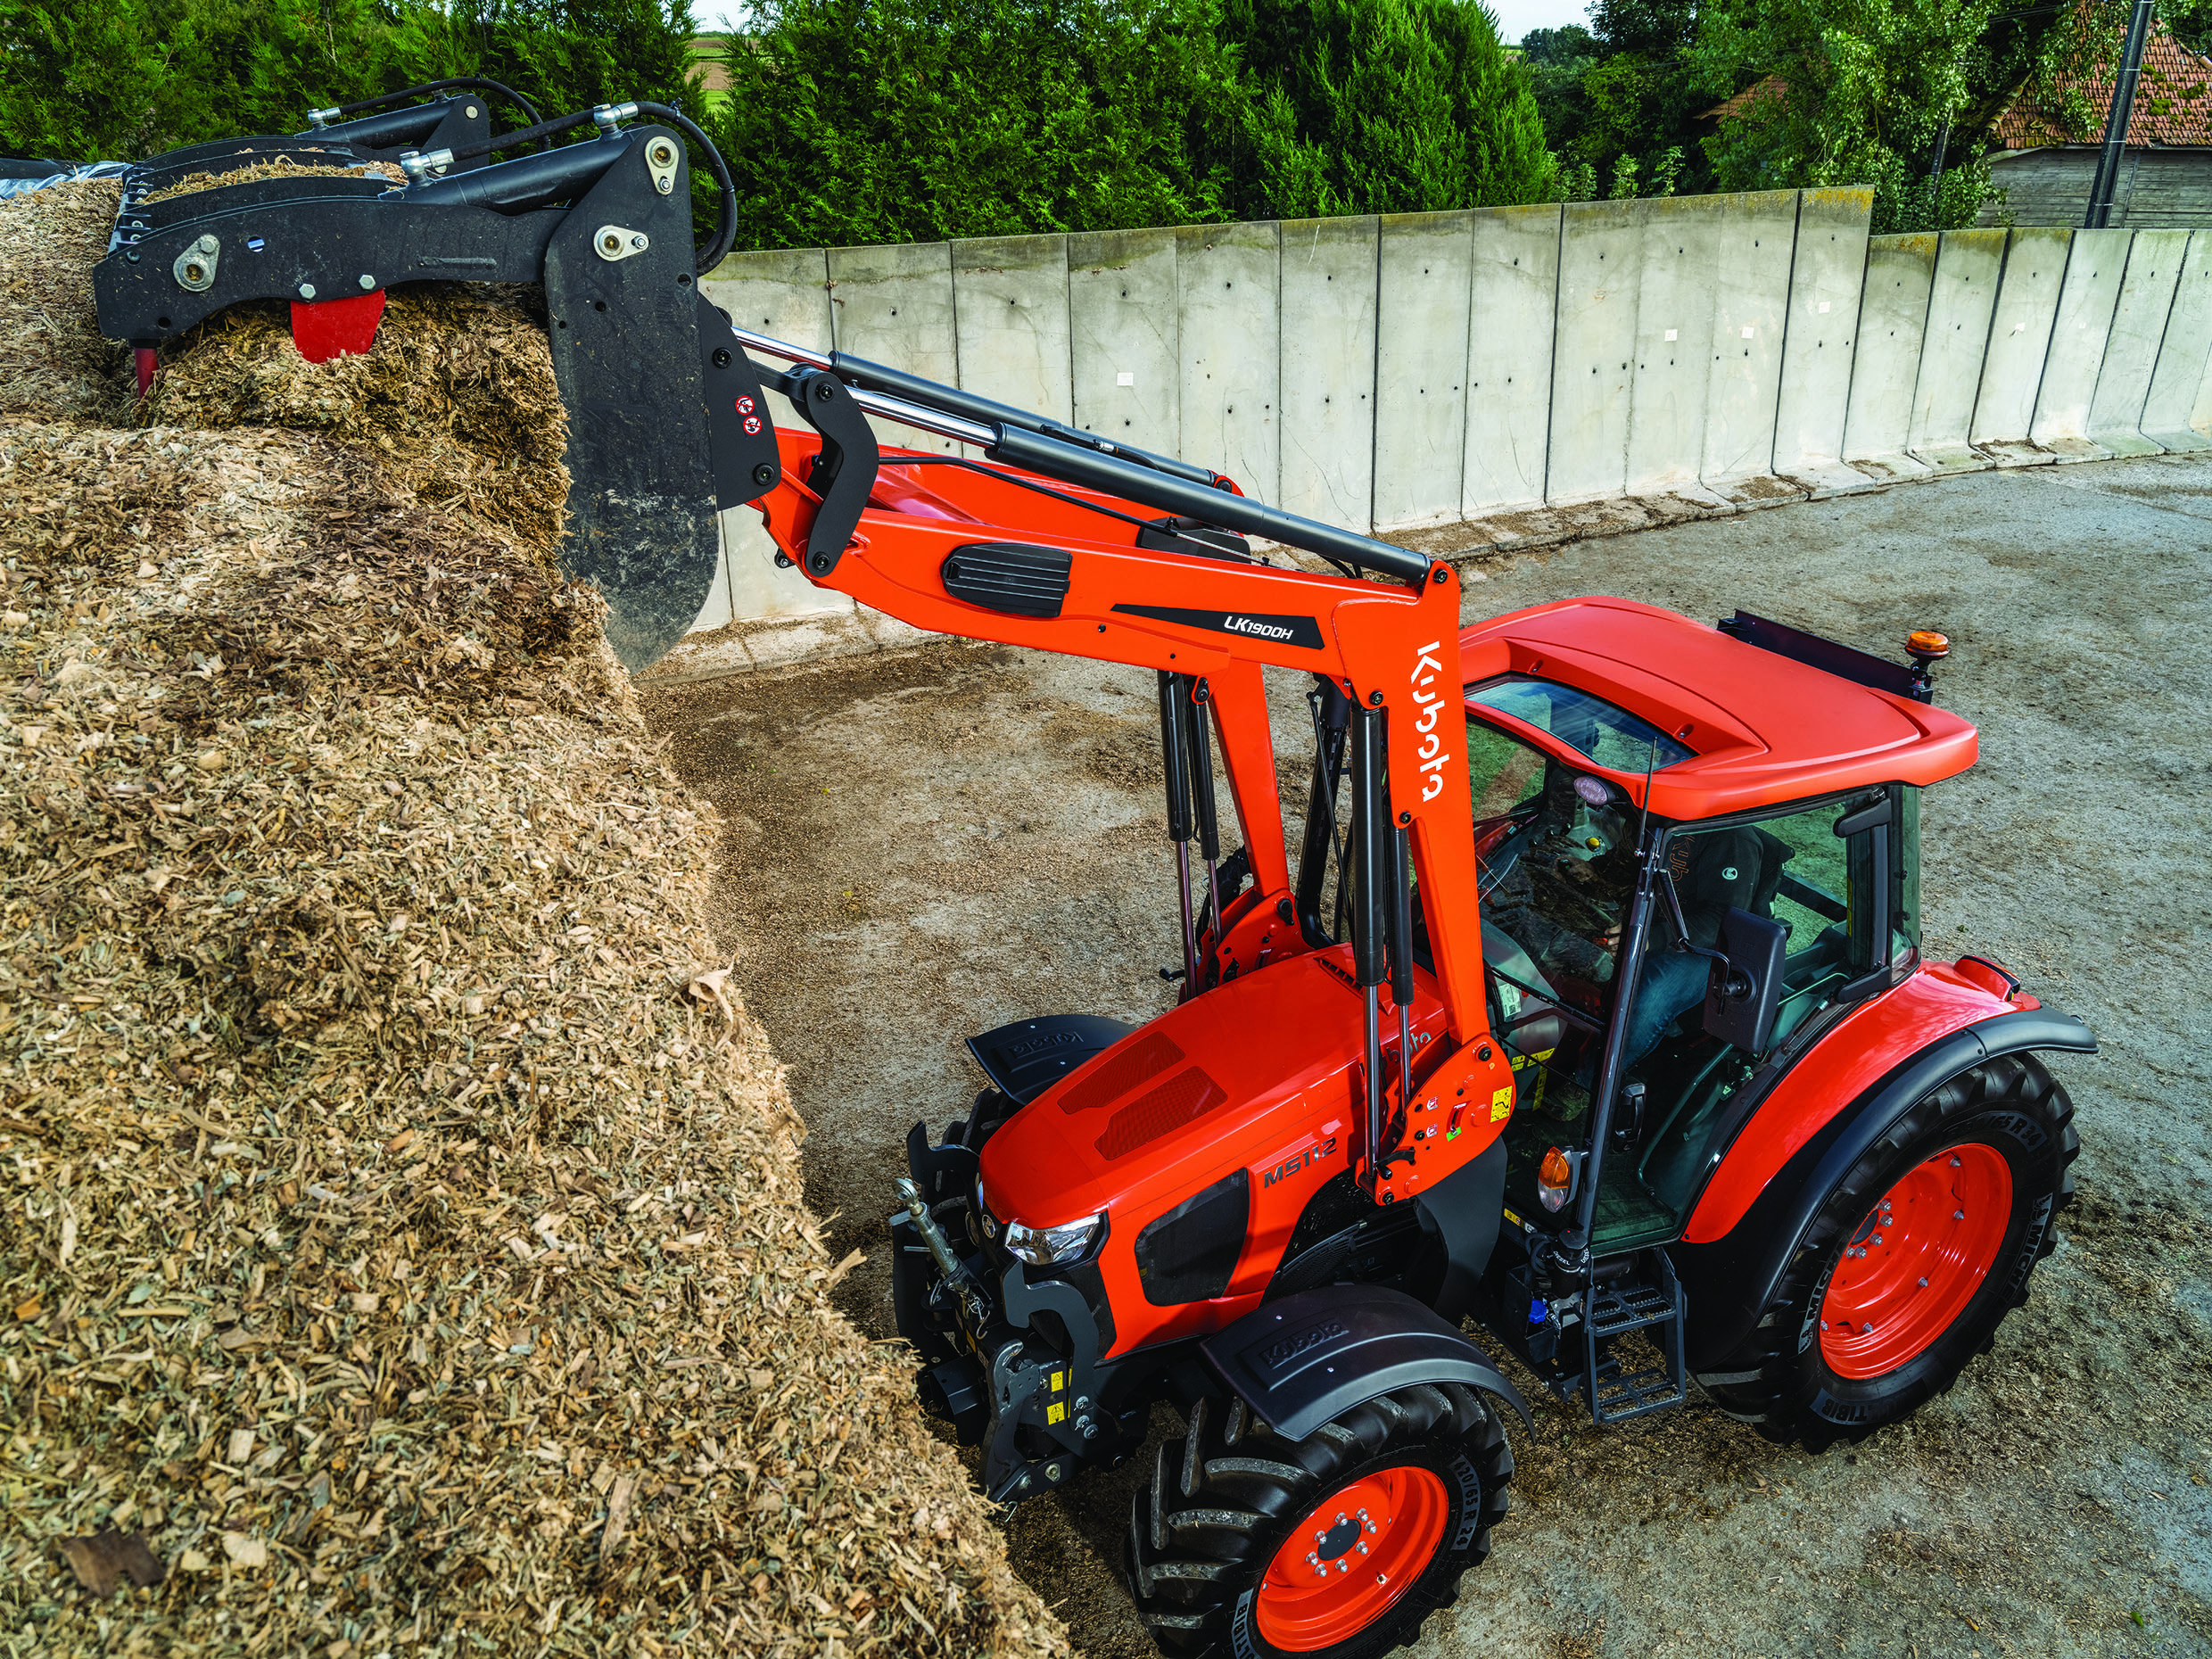 Kubota loader range for M-series tractors